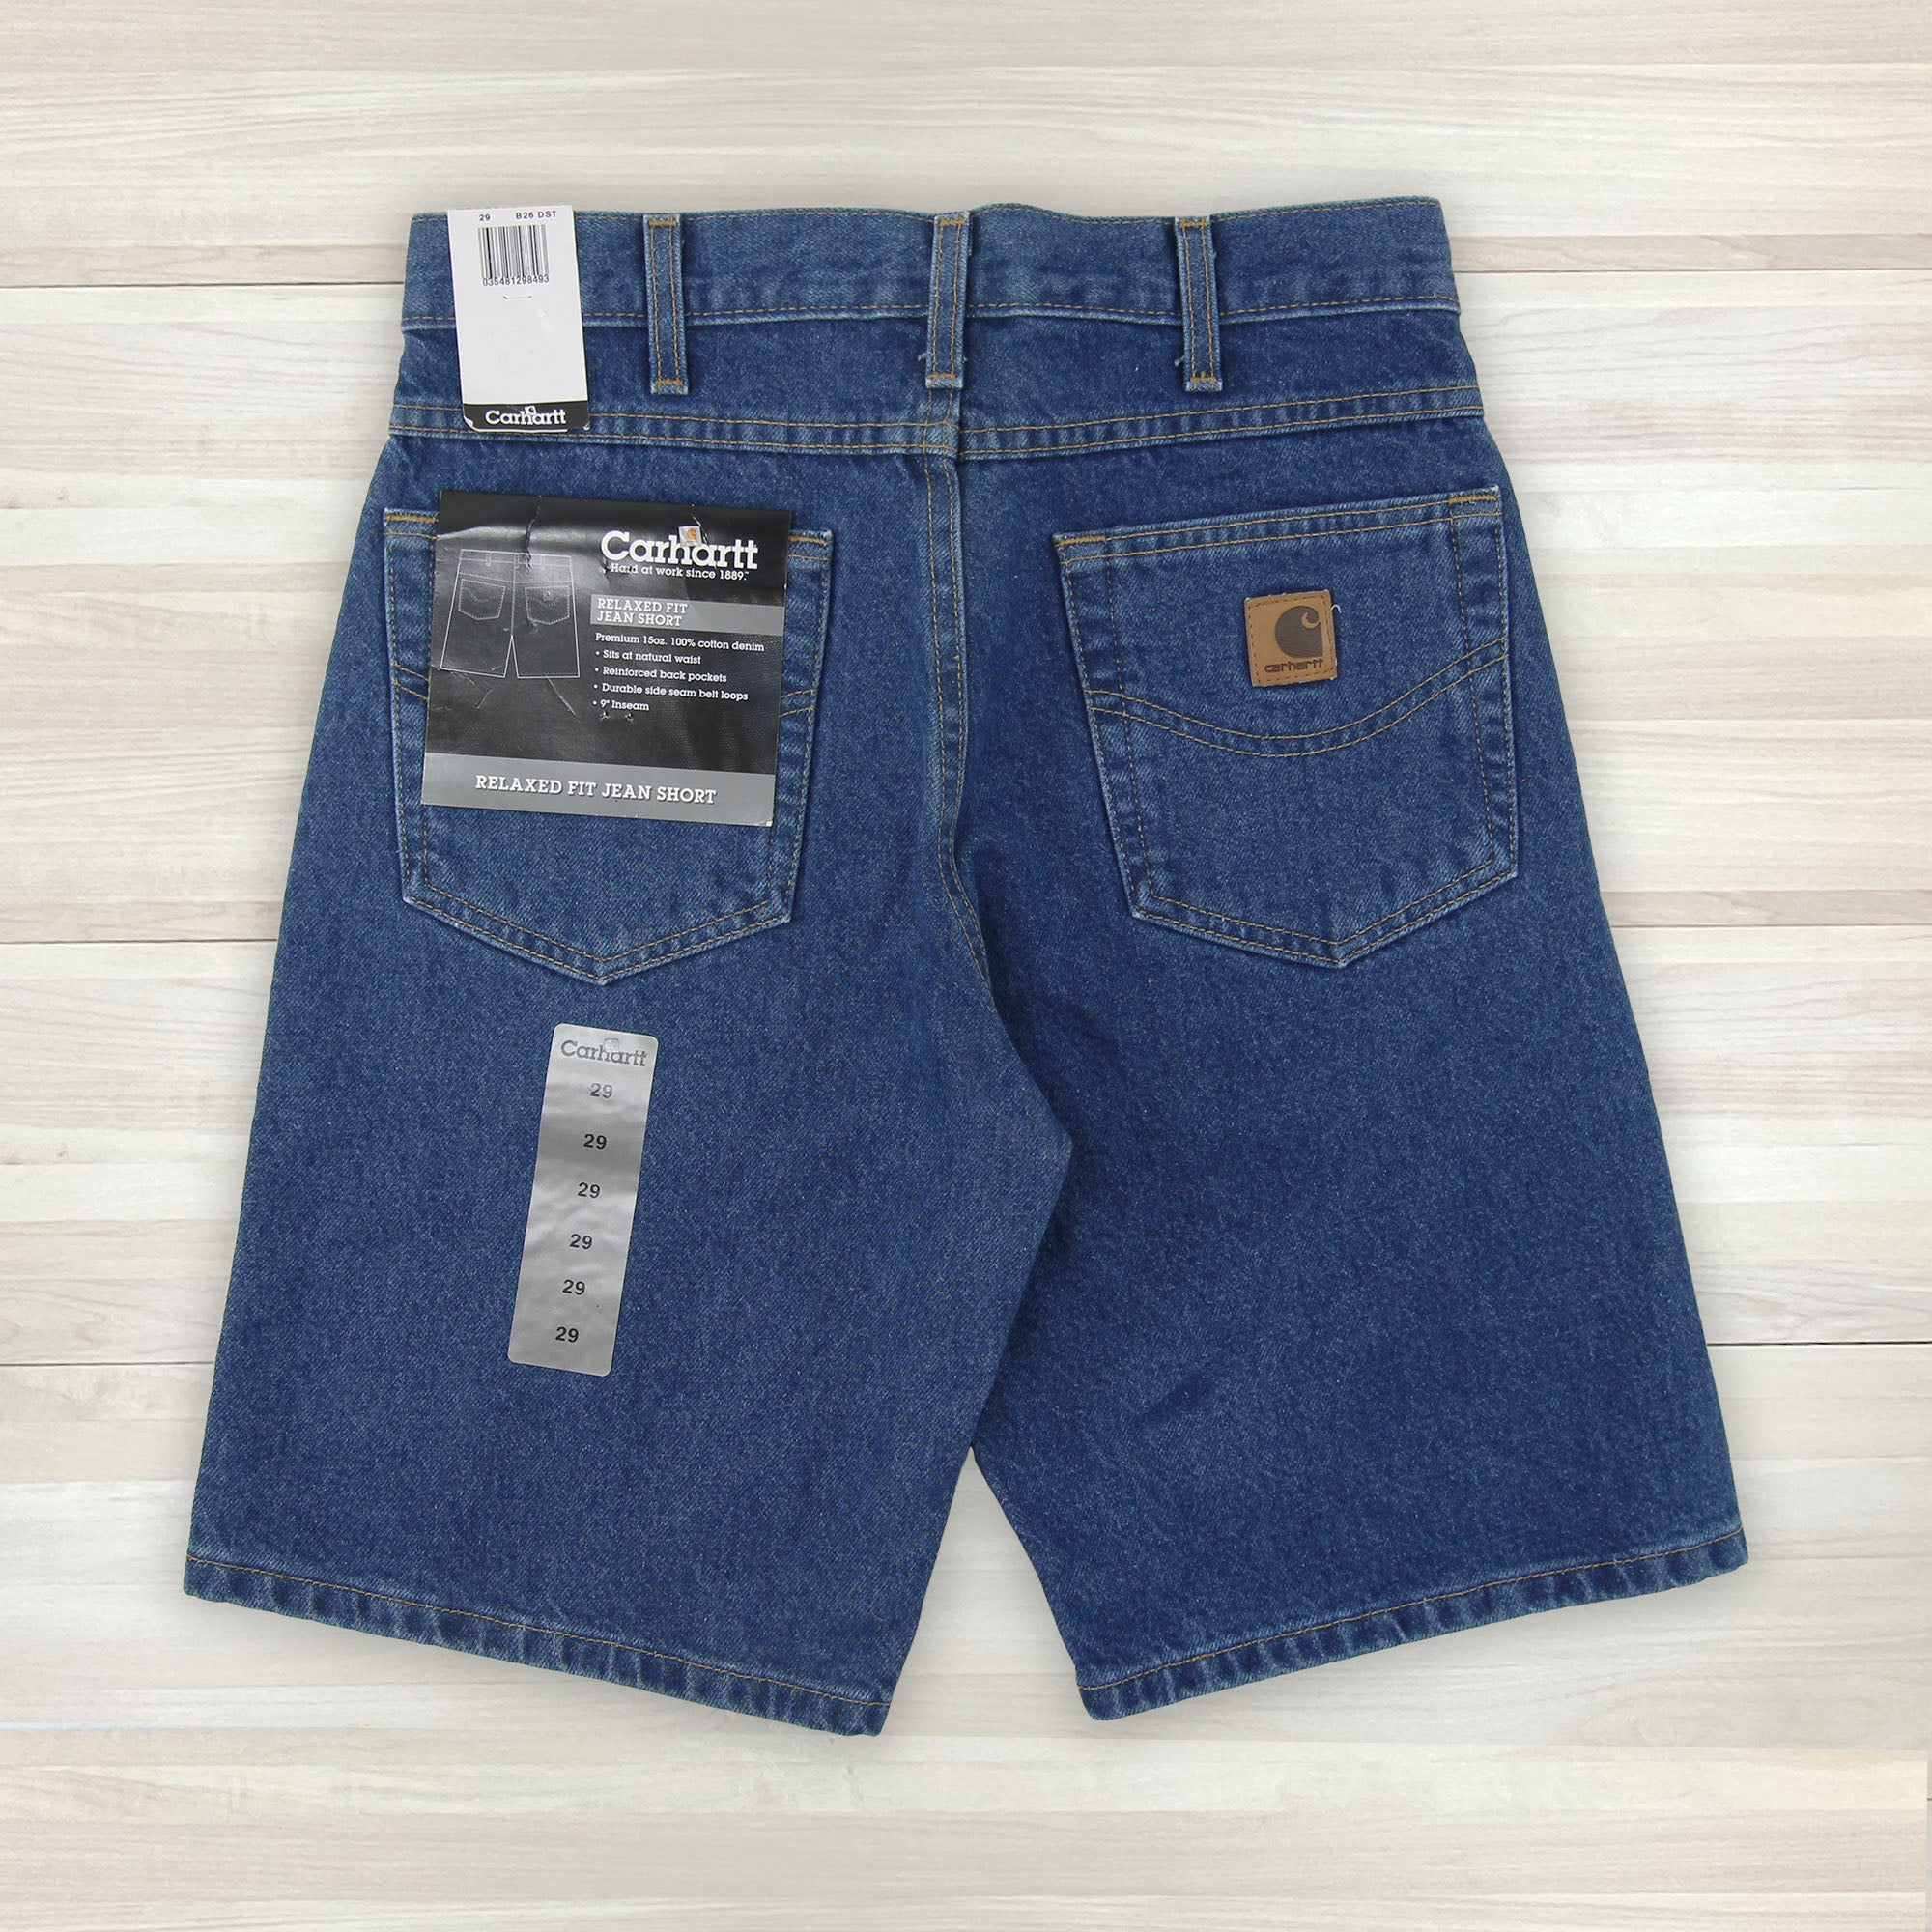 Vintage Men's Blue Carhartt Denim Relaxed Fit Shorts NWT 29x9 - 0